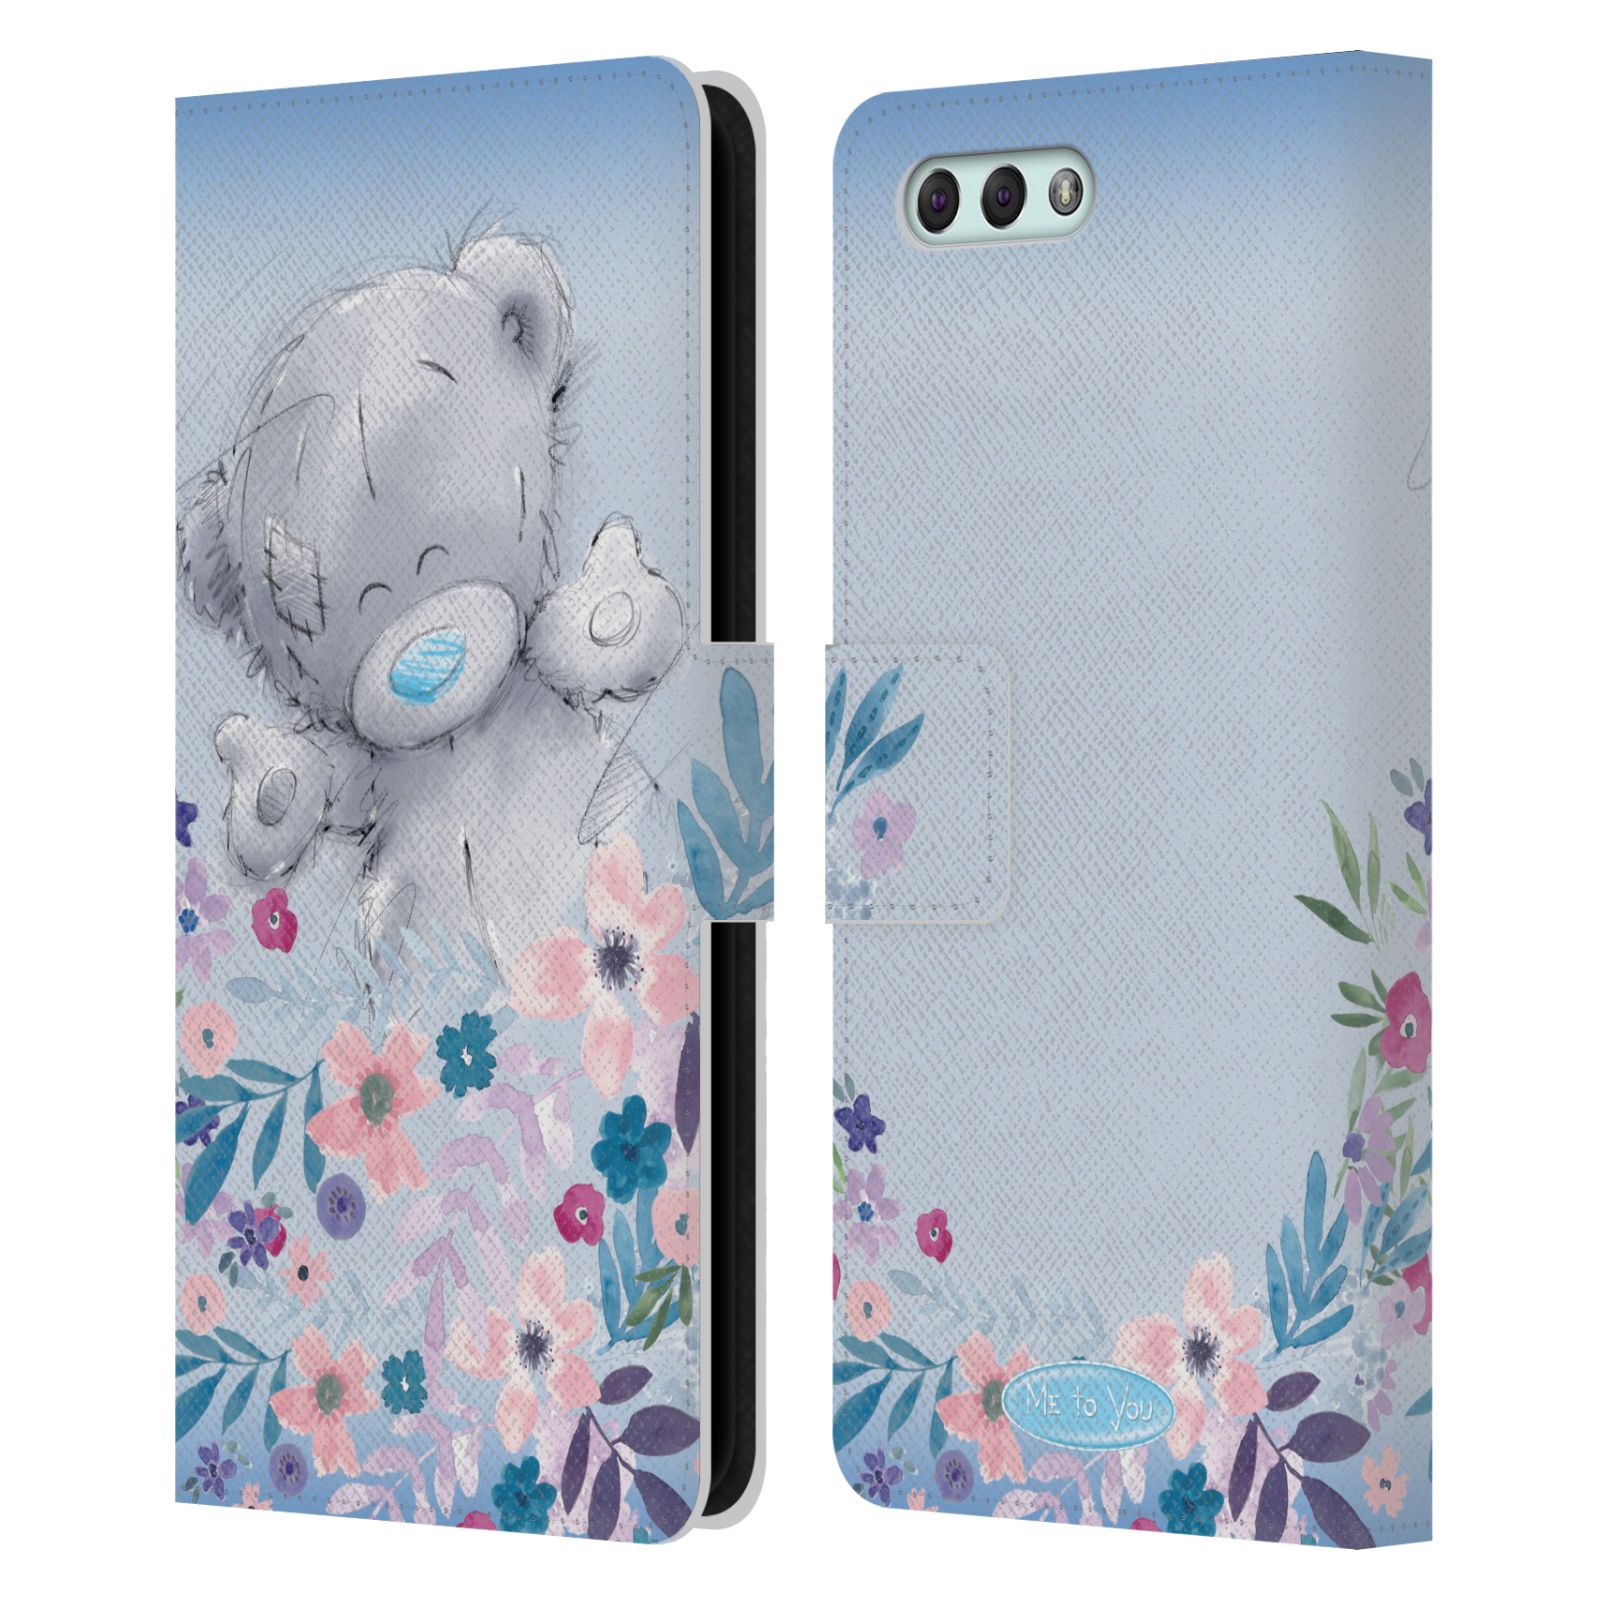 Pouzdro na mobil Asus Zenfone 4 ZE554KL  - HEAD CASE - Me To You - Medvídek mezi květinami